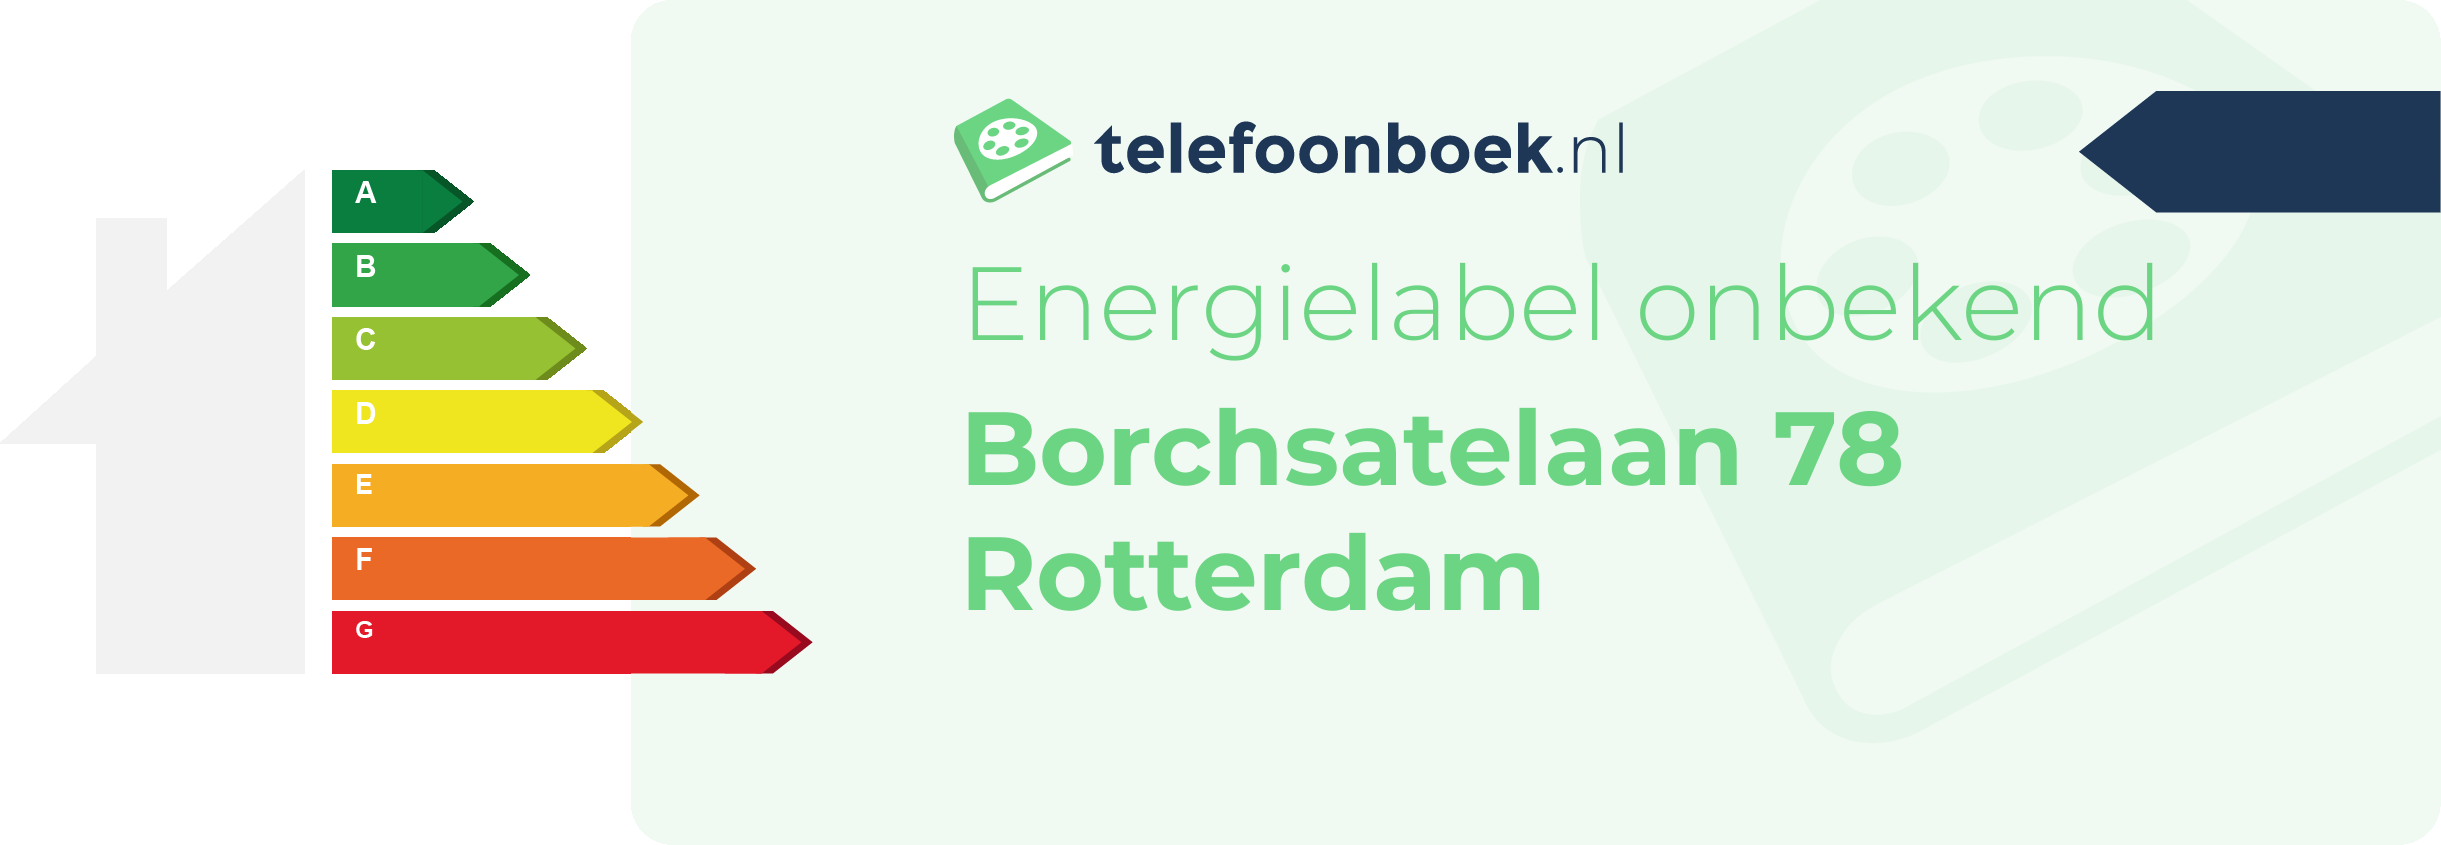 Energielabel Borchsatelaan 78 Rotterdam